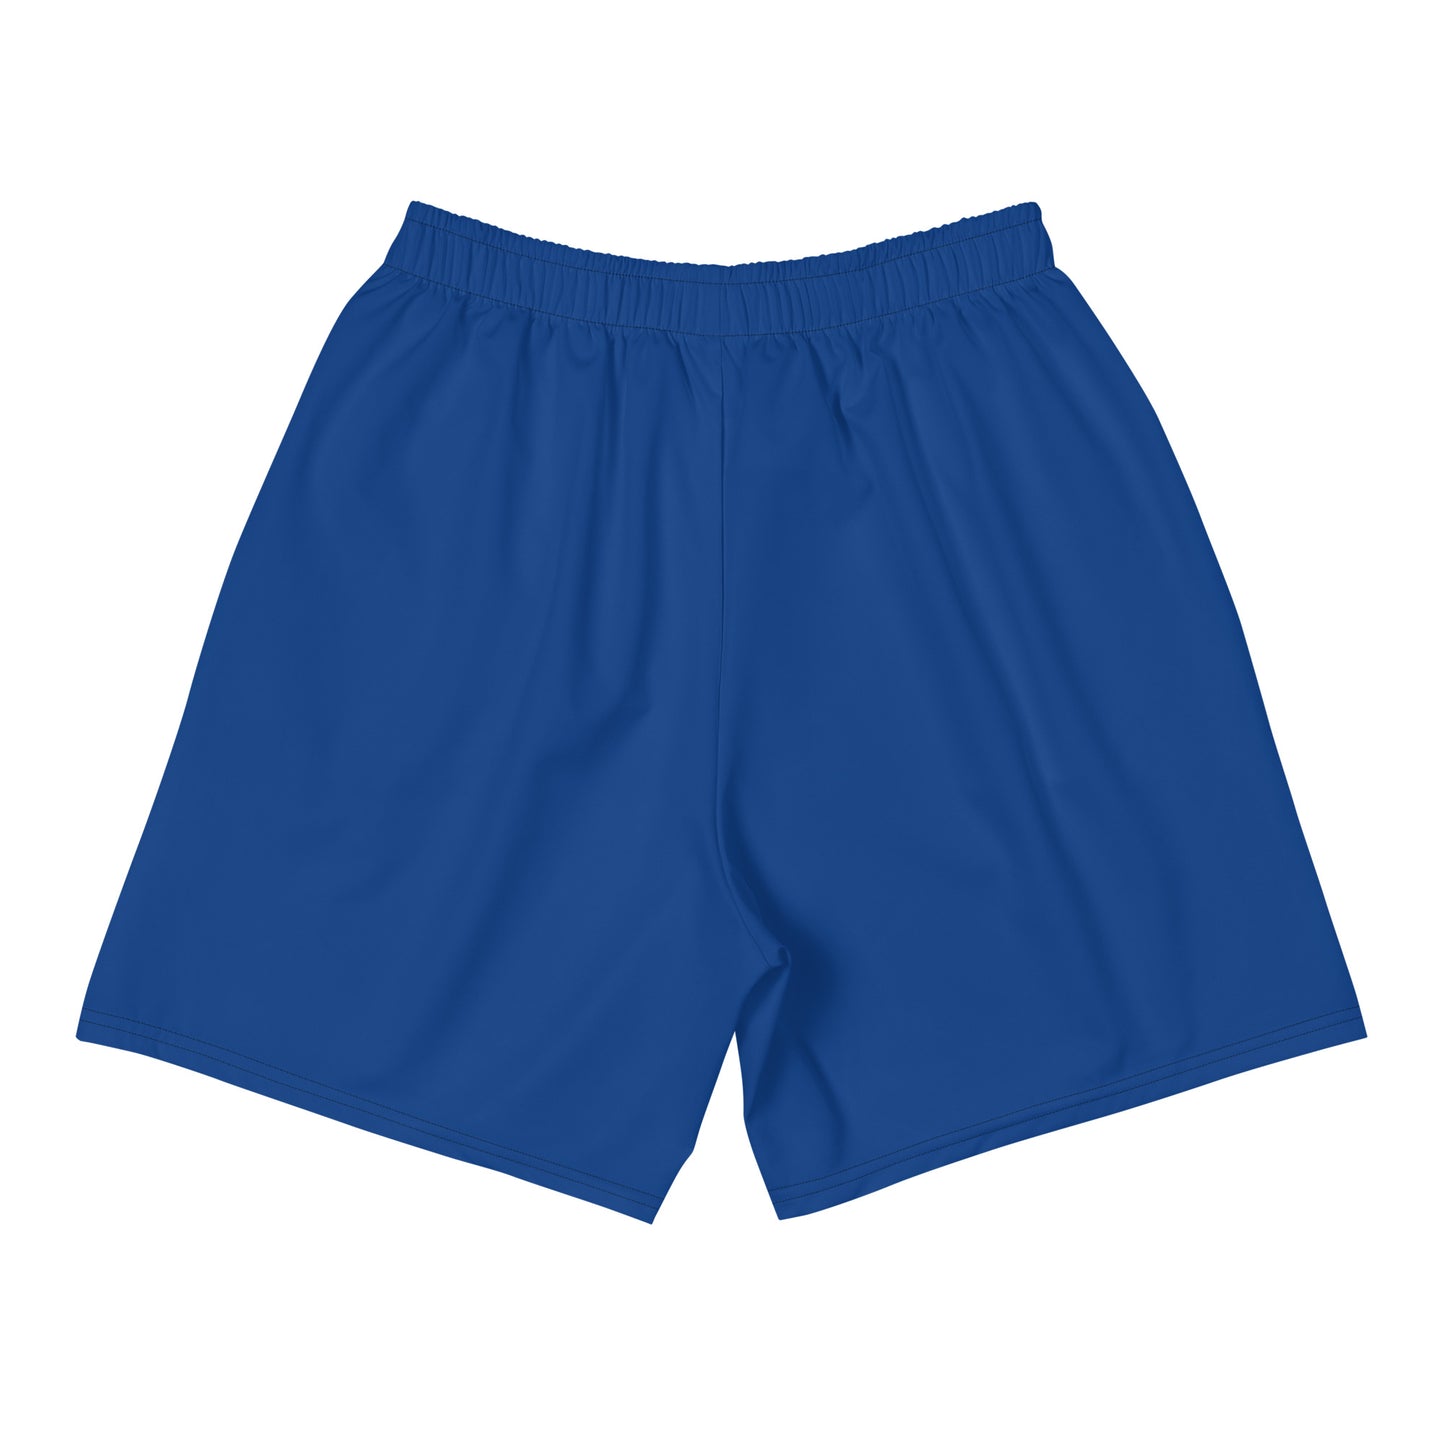 Men's Vegeta Athletic Shorts